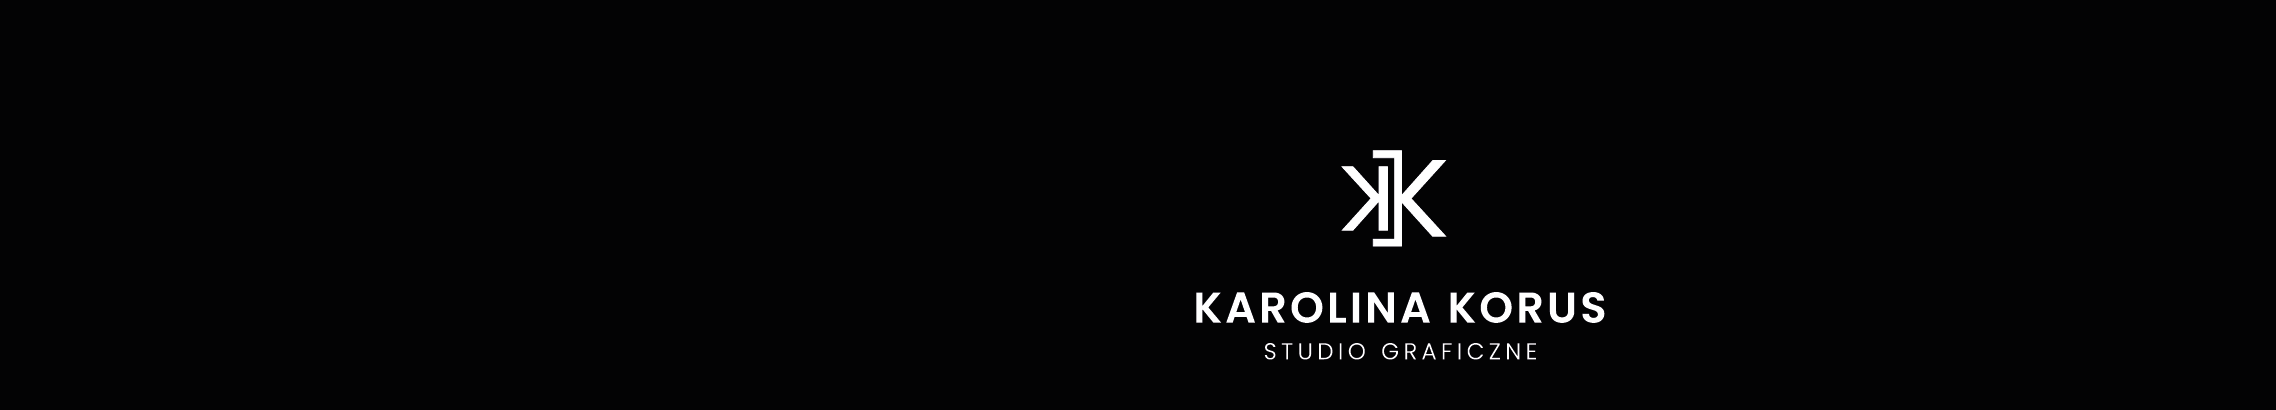 Karolina Korus's profile banner